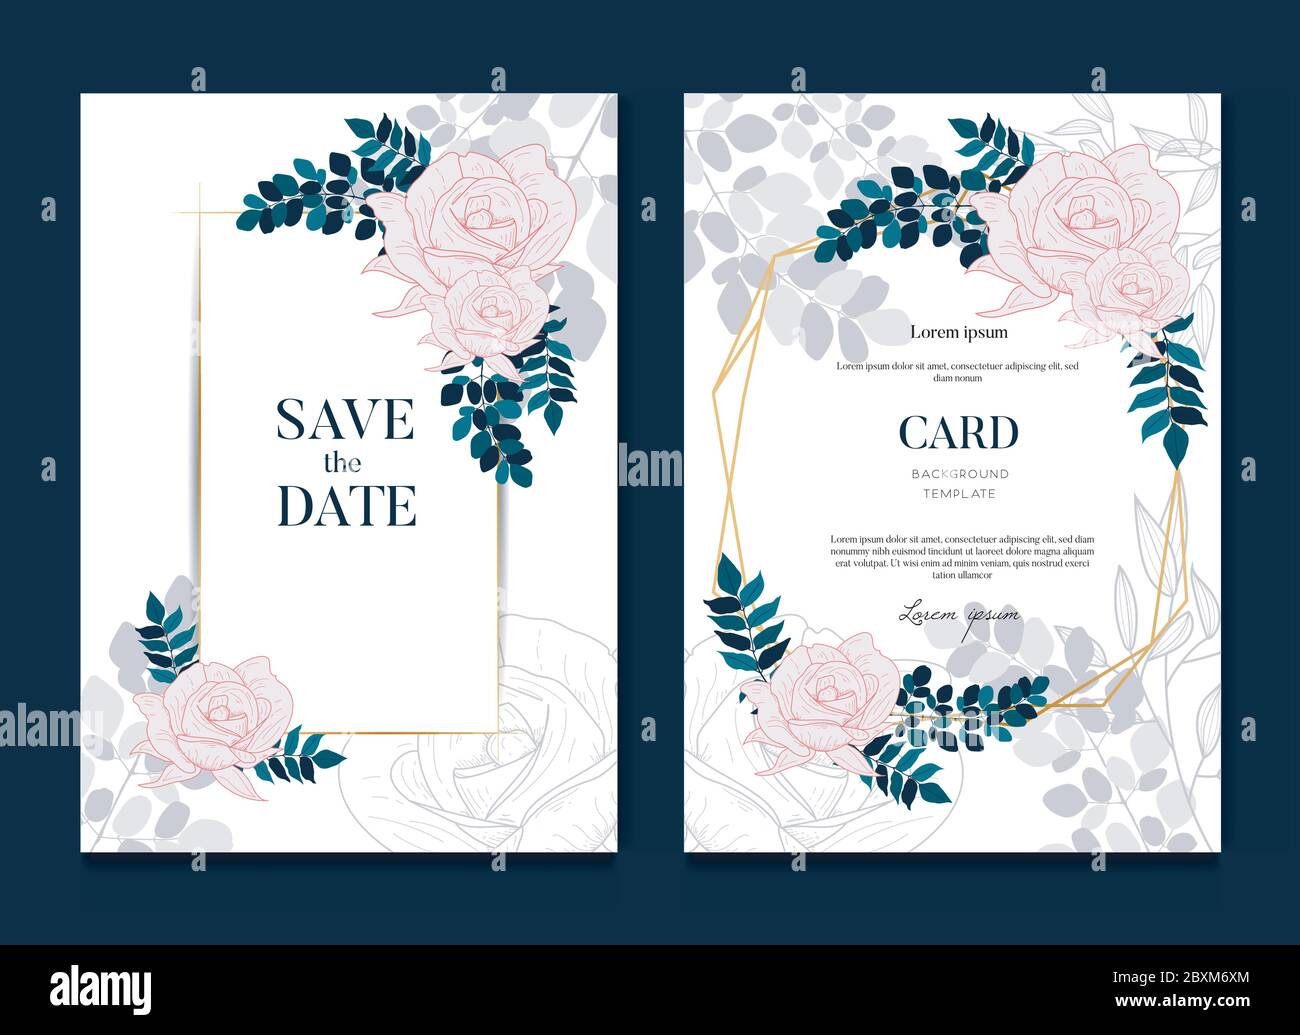 wedding borders for invitations